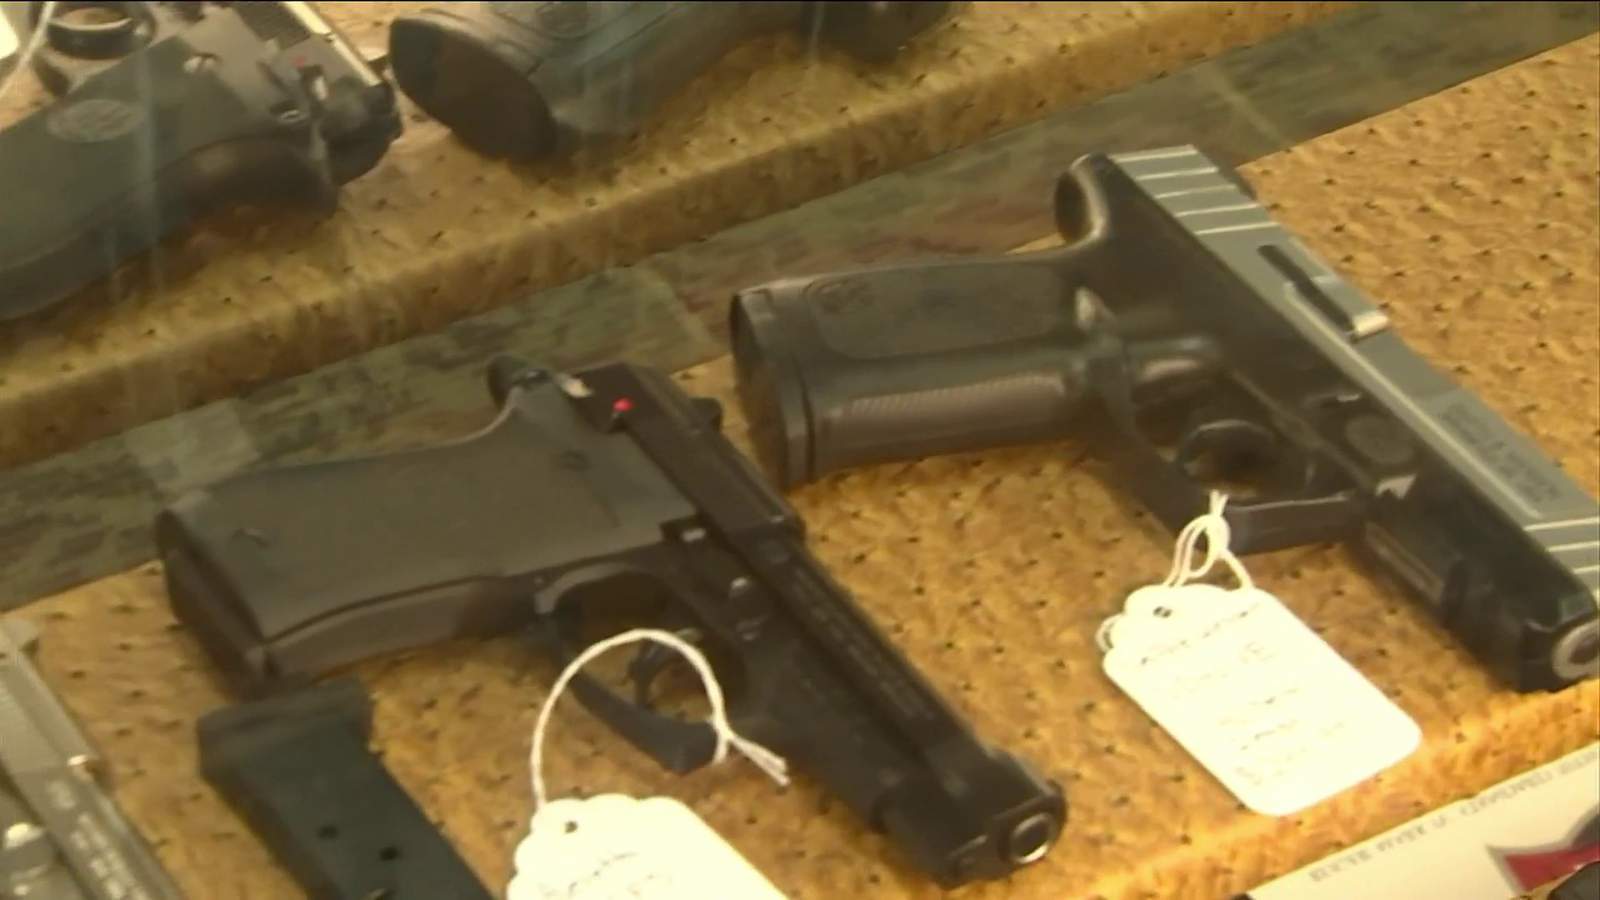 FDLE: Gun background checks up 71% in year’s first 10 days